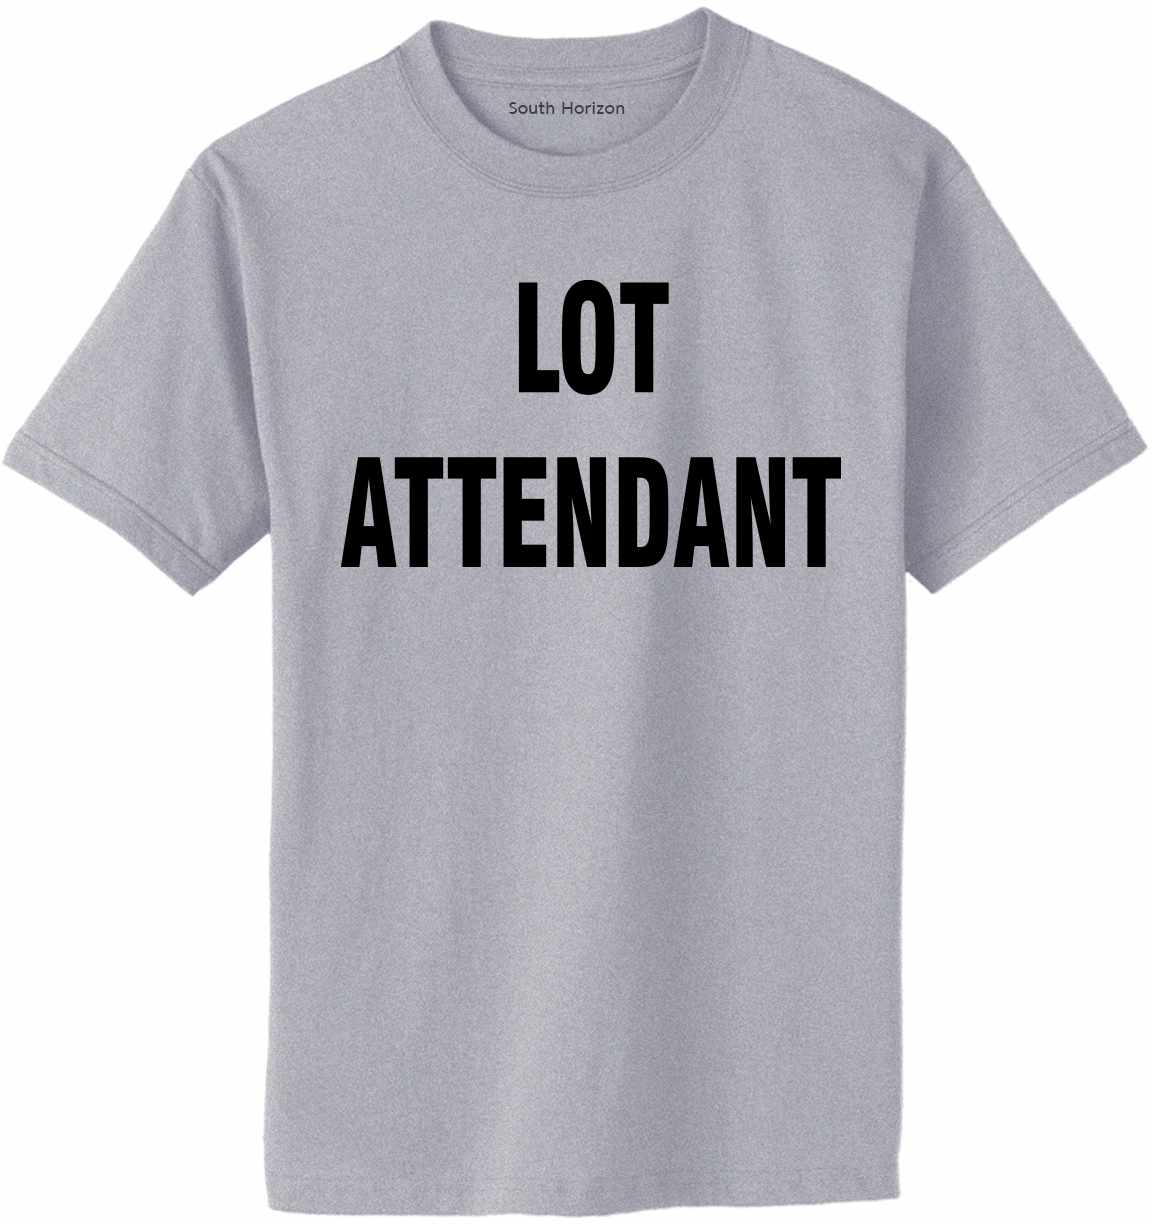 LOT ATTENDANT Adult T-Shirt (#909-1)